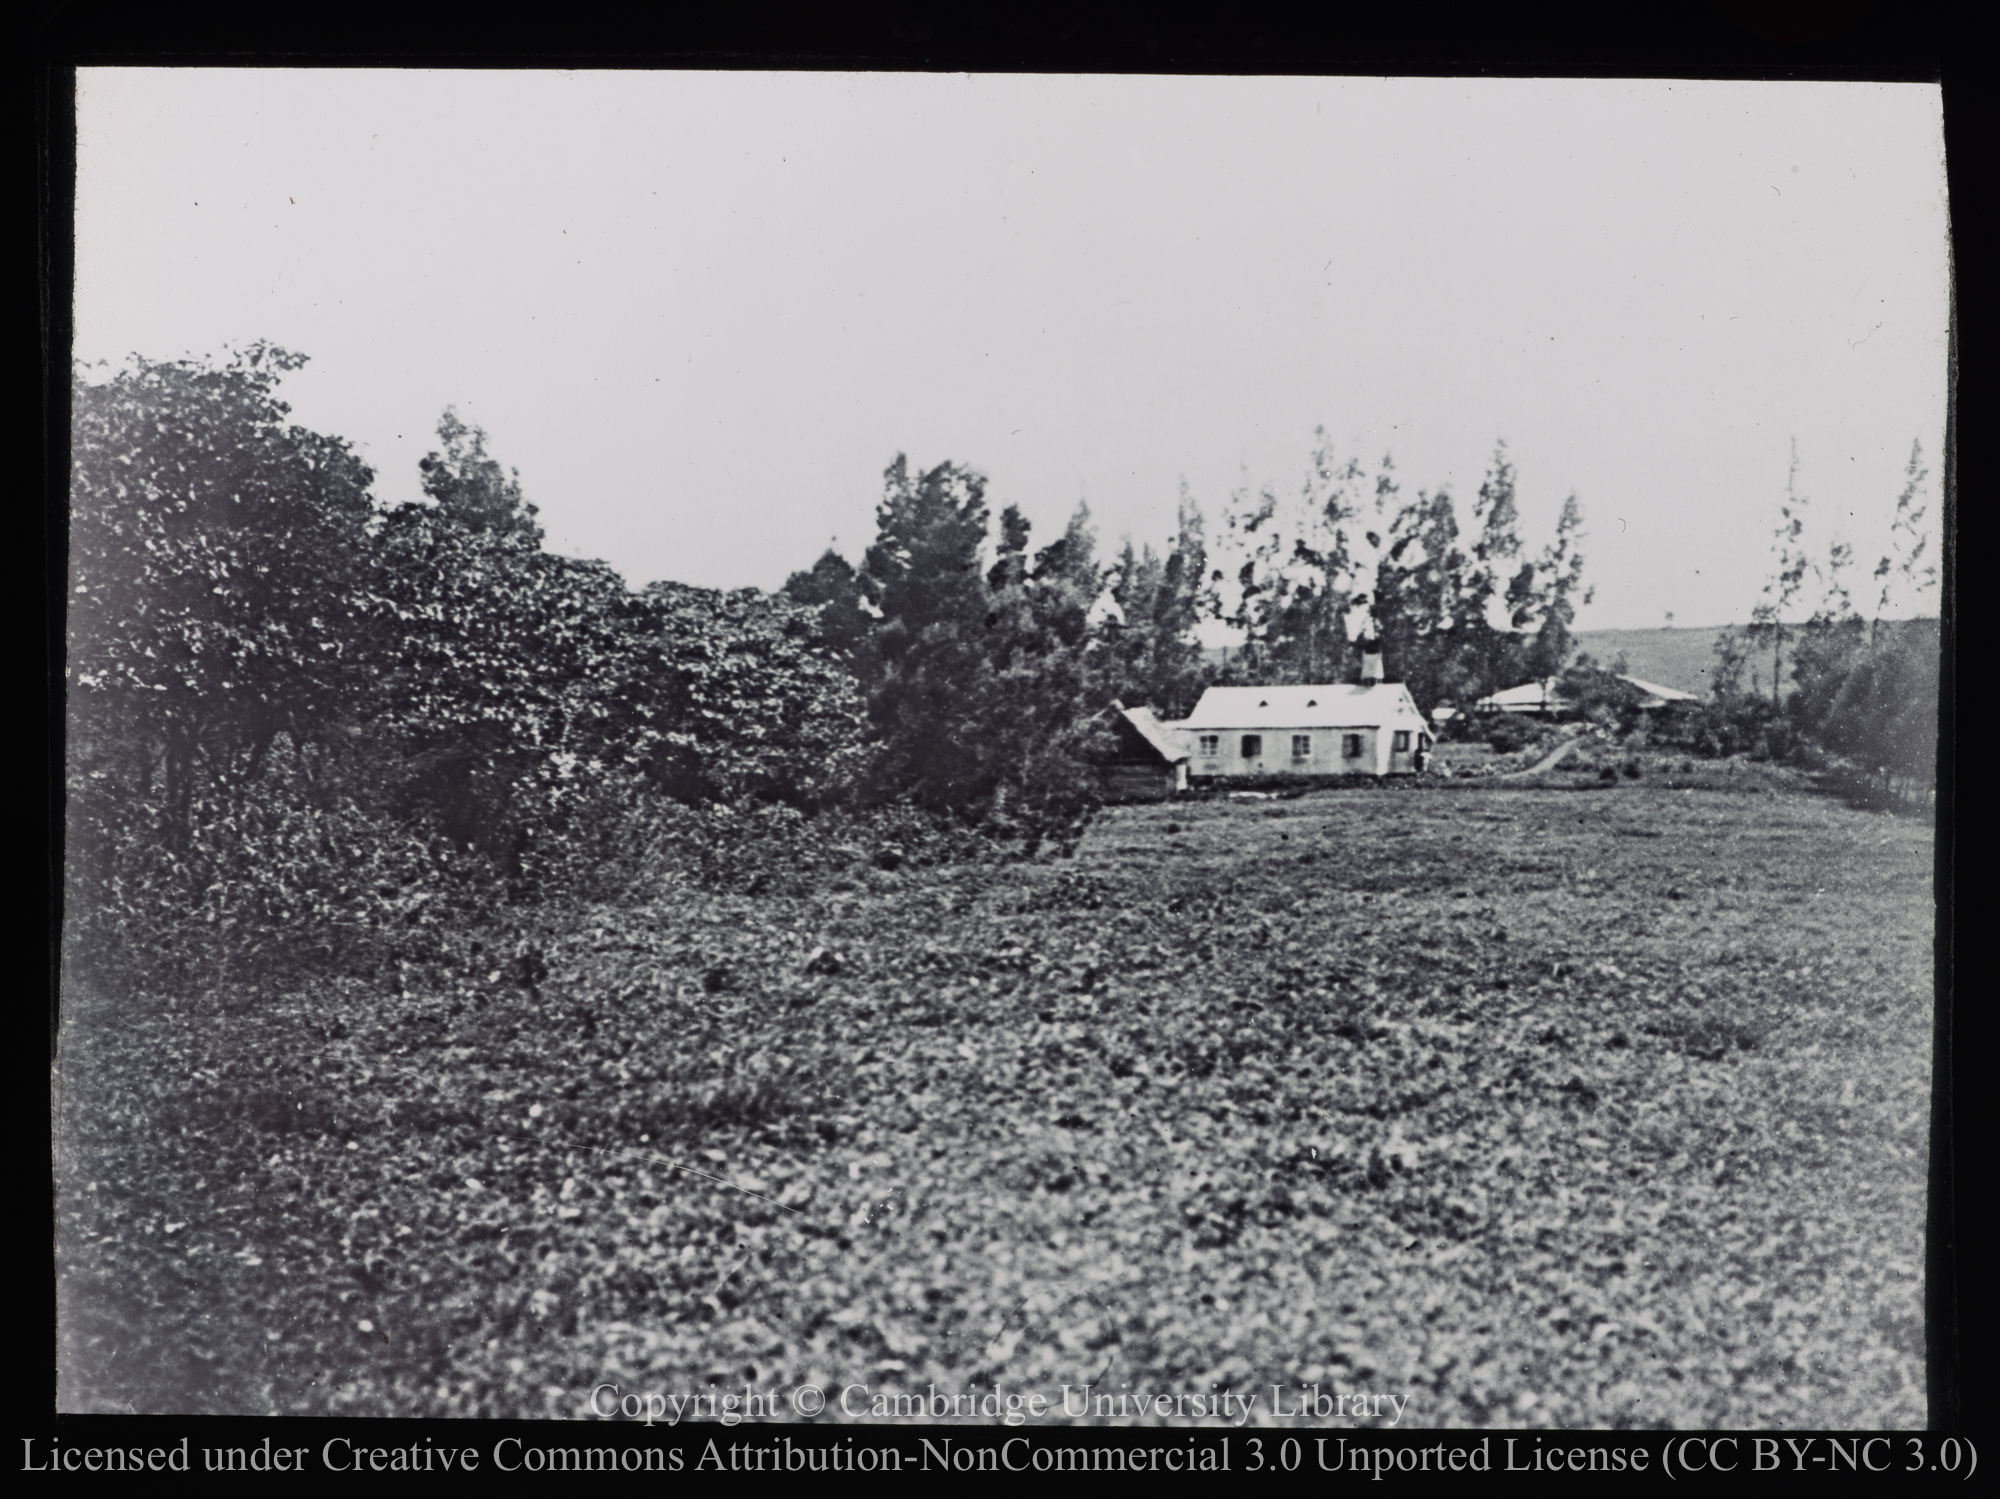 Kabete (Kenya) Church and mission house, 1892 - 1914